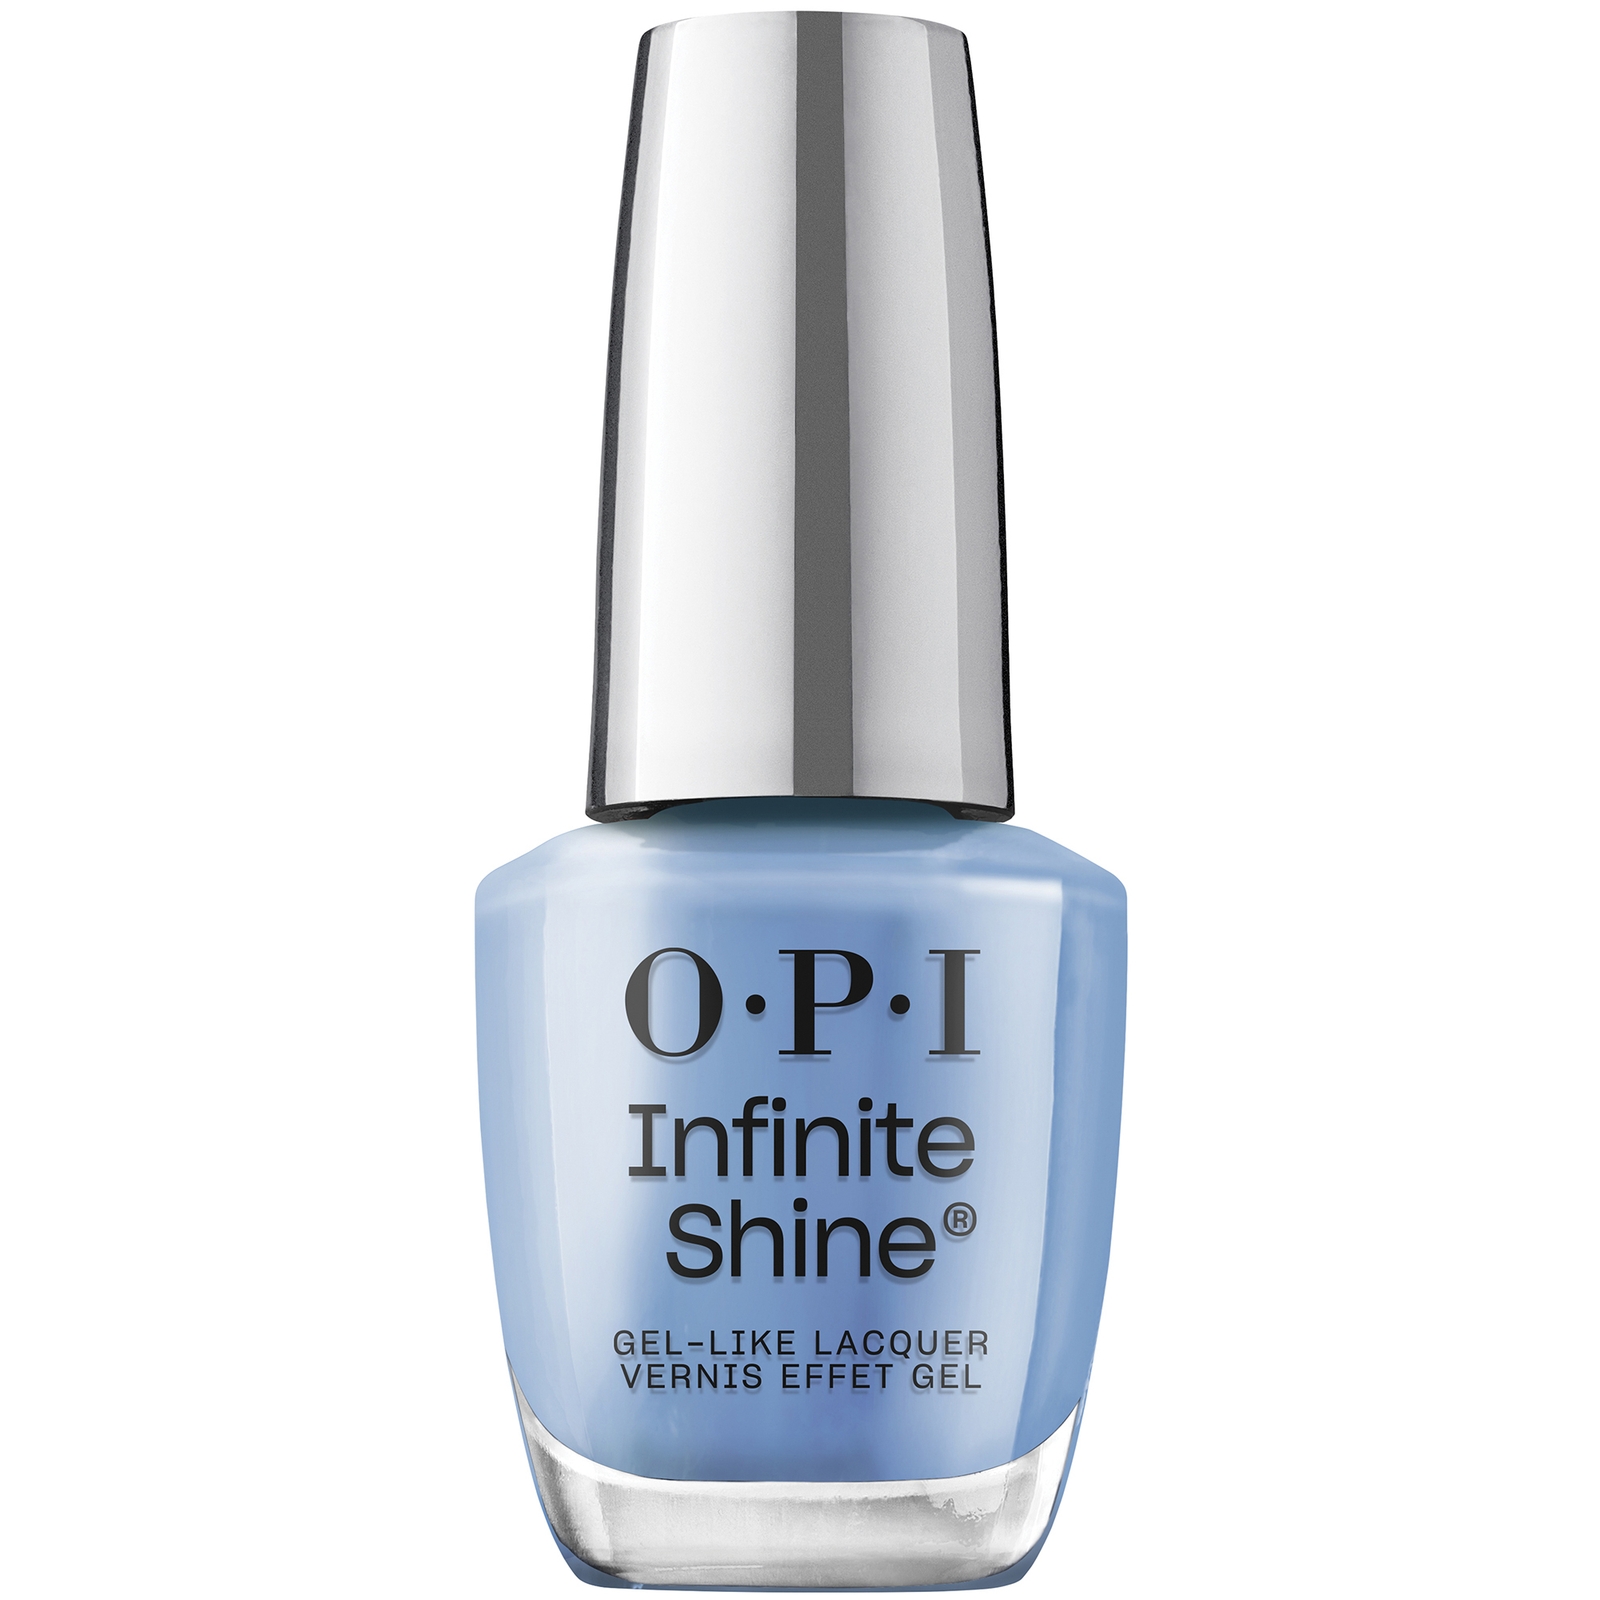 Opi Infinite Shine Long-wear Nail Polish - Strongevity 15ml In White